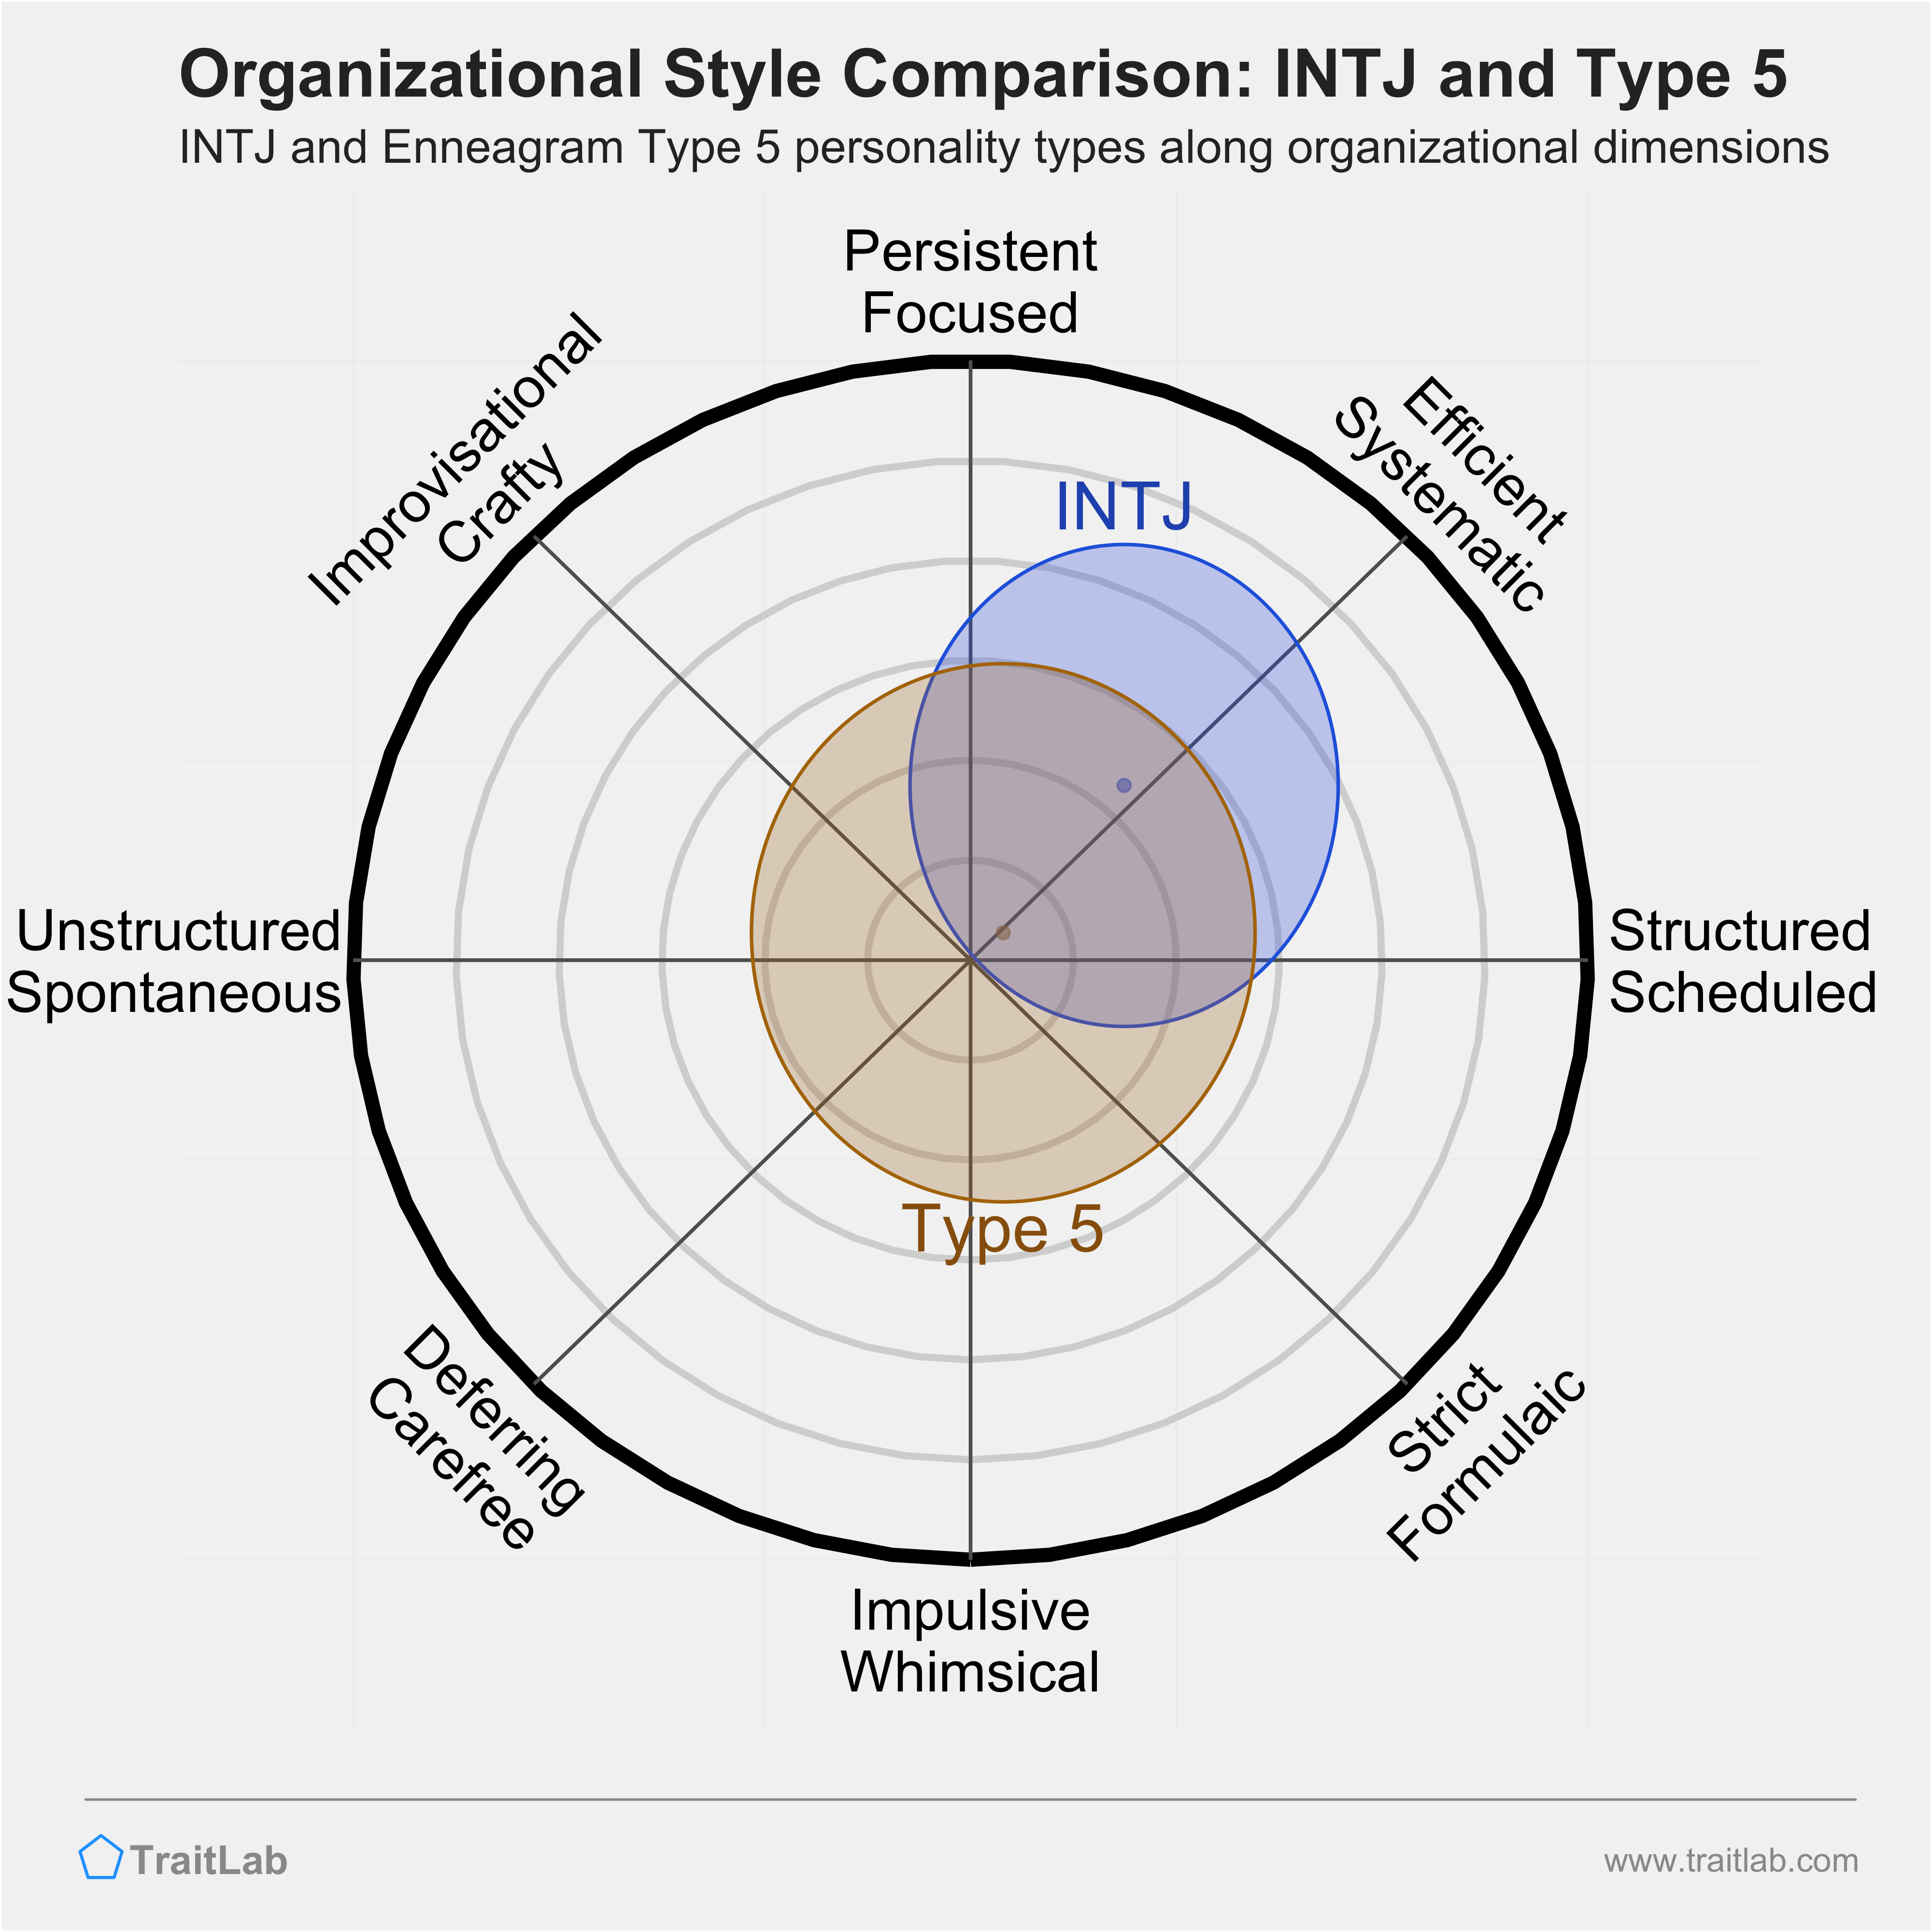 INTJ and Type 5 comparison across organizational dimensions